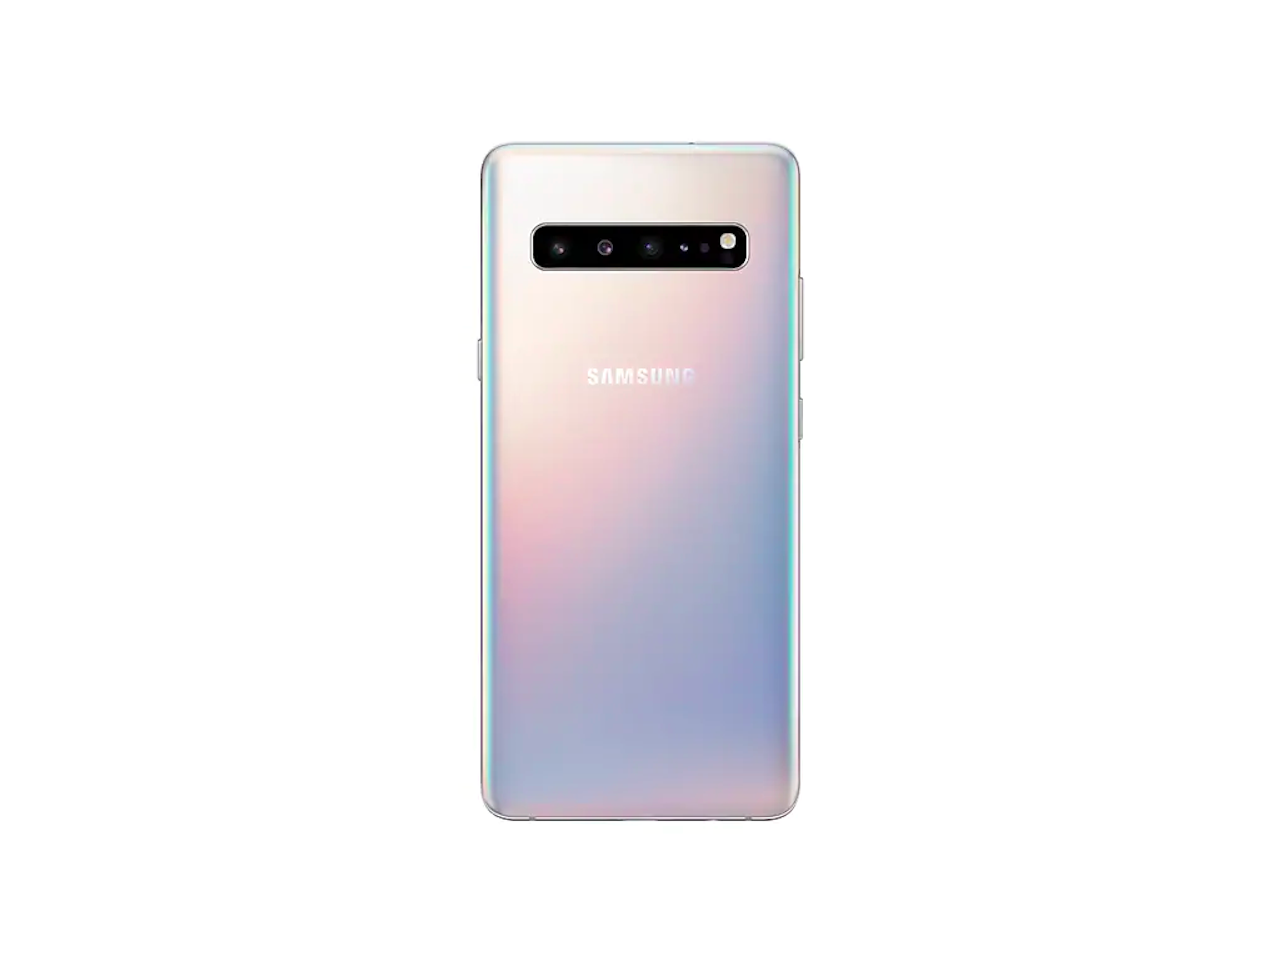 Samsung Galaxy S10 5g Unlocked 256gb 67 Amoled 8gb Ram Smartphone